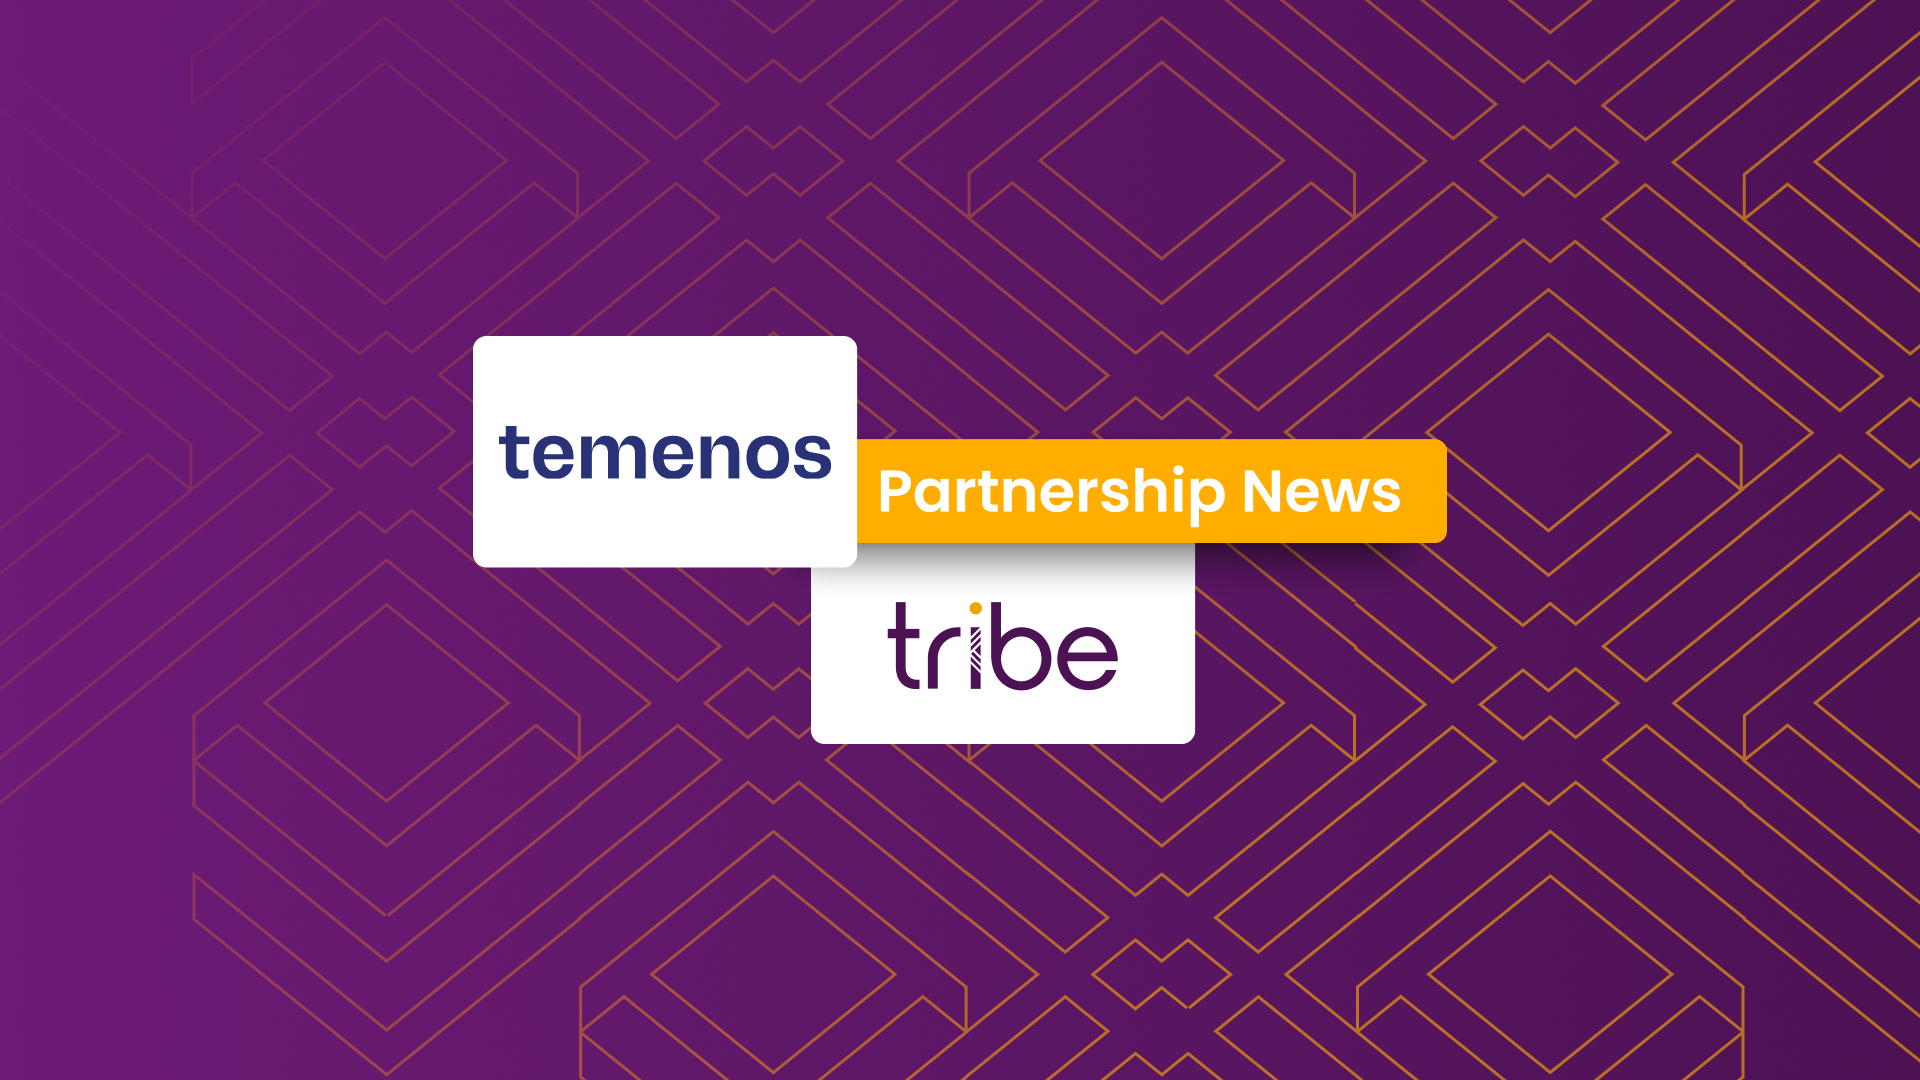 Logos of Temenos and Tribe, showcasing new partnership